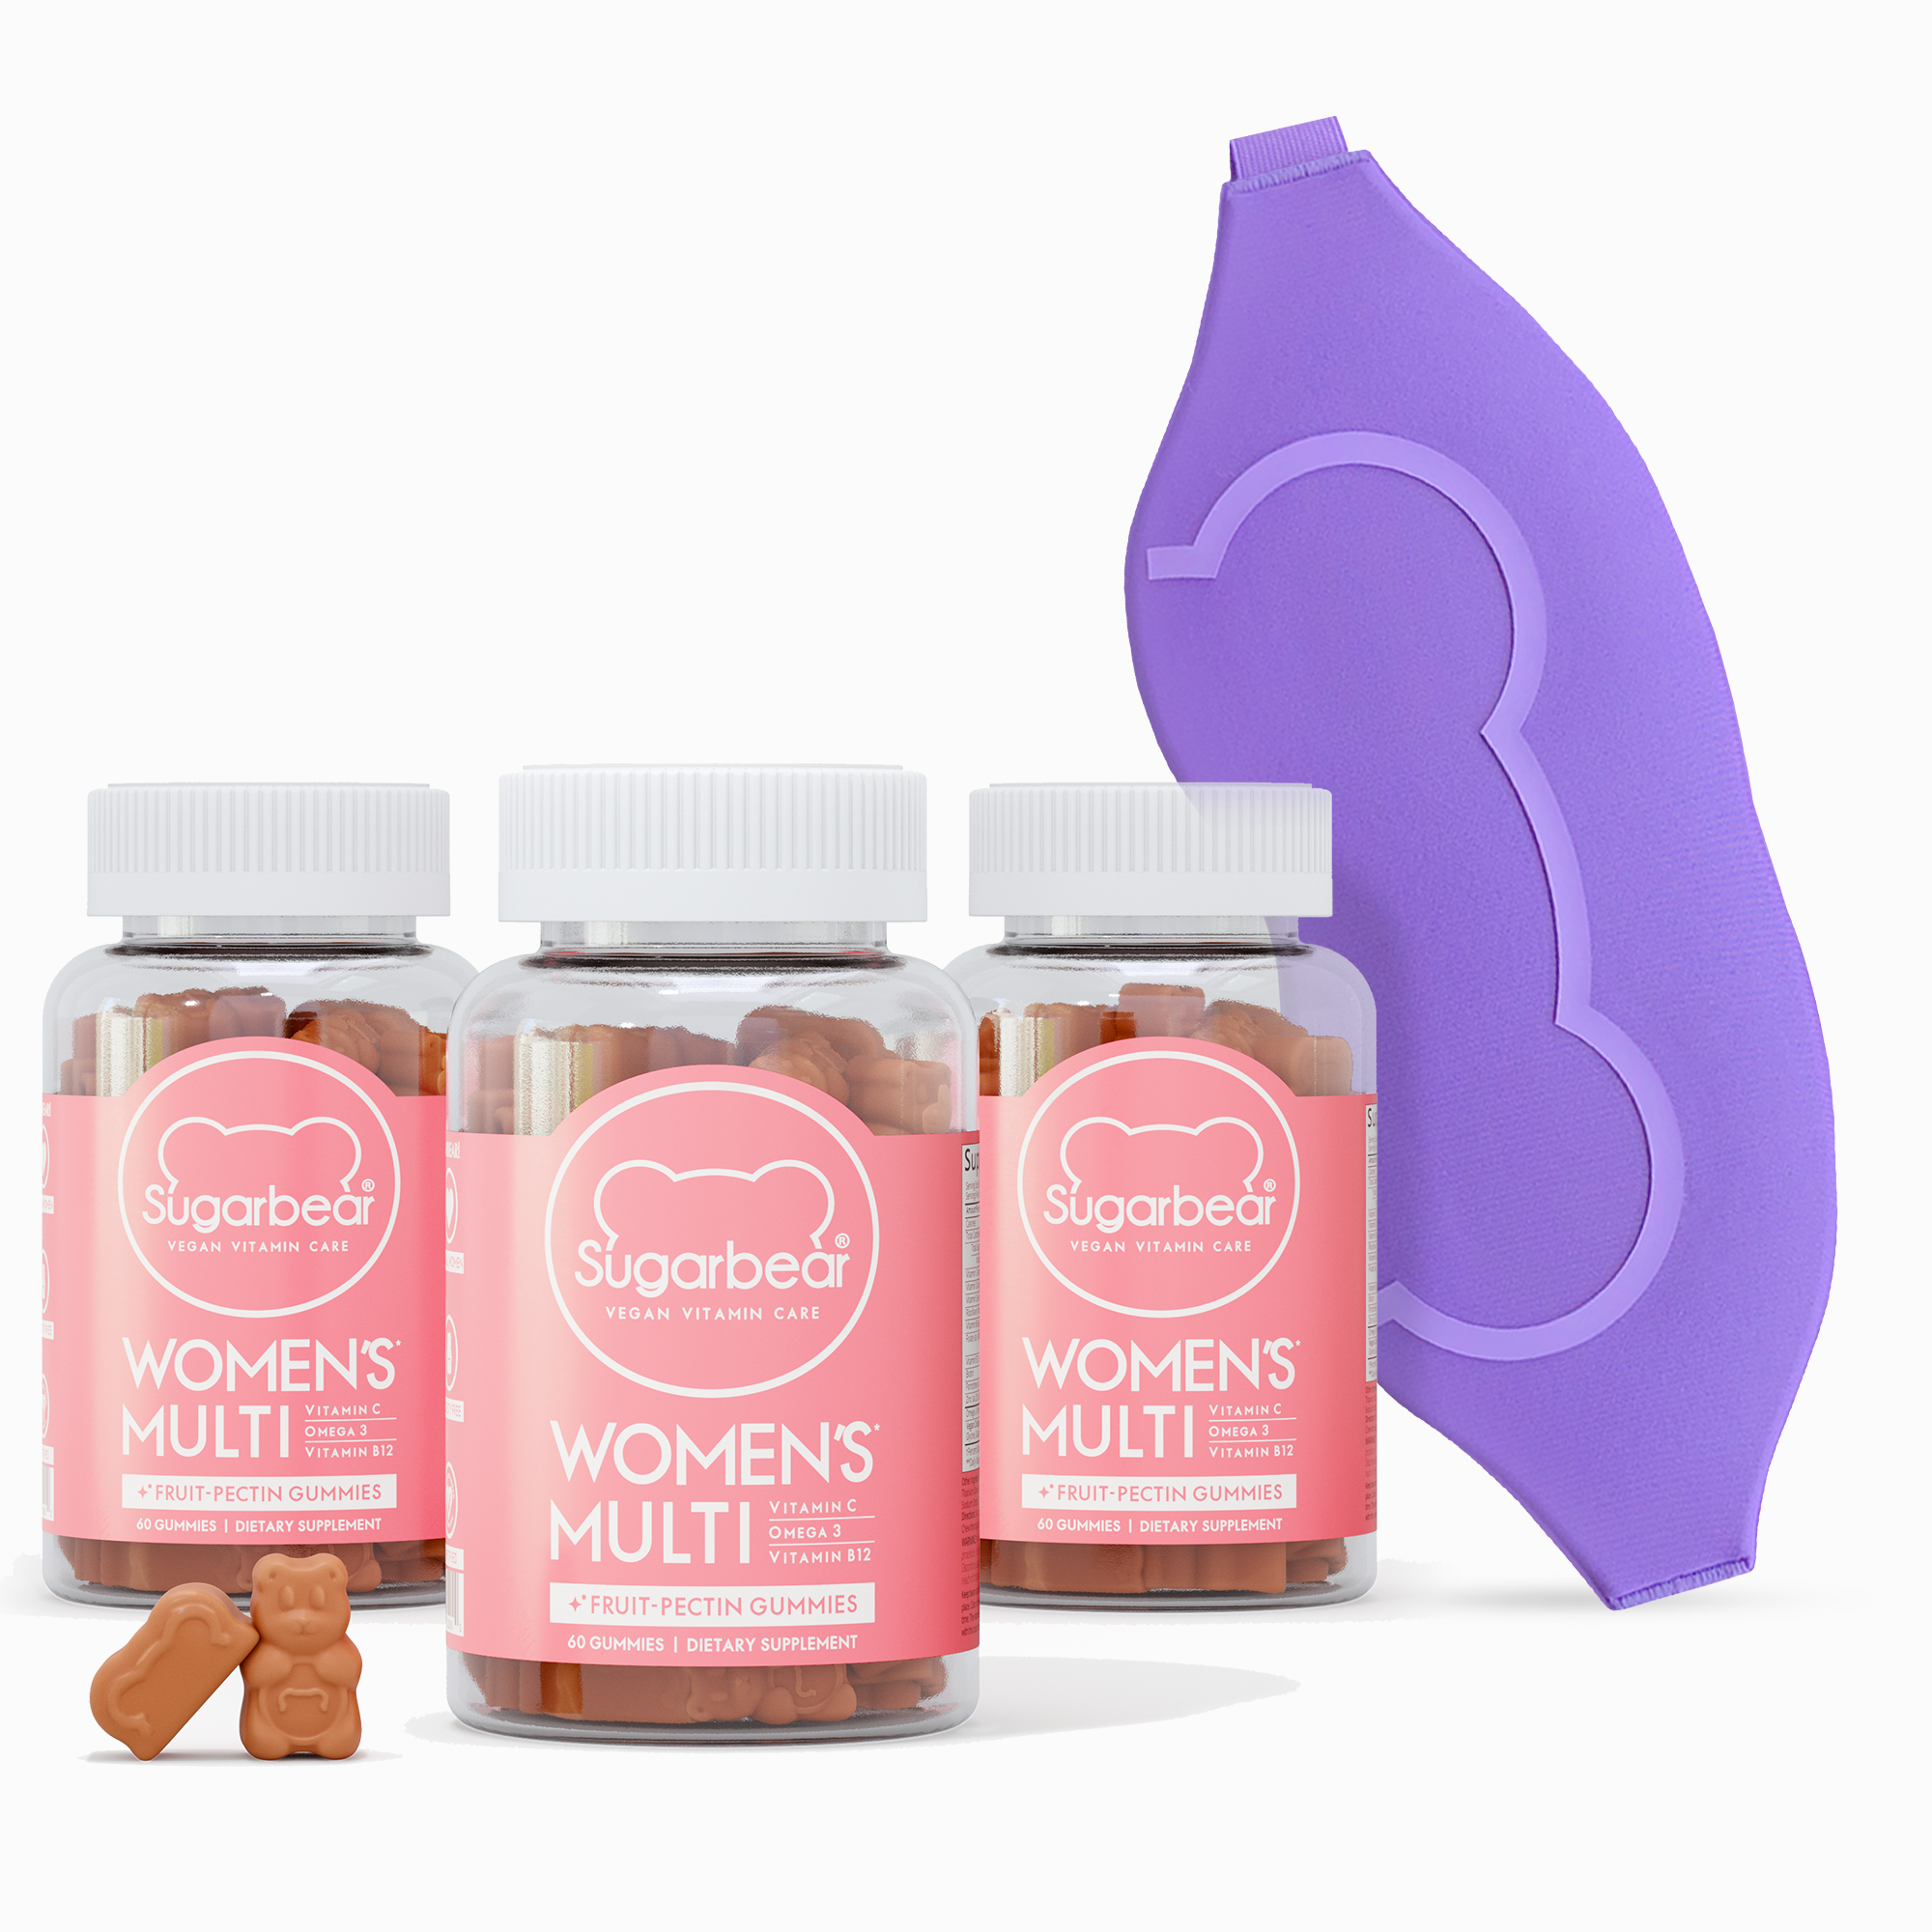 Sugarbear Women's Multi Vitamins - Paquete de 3 meses + regalo gratis